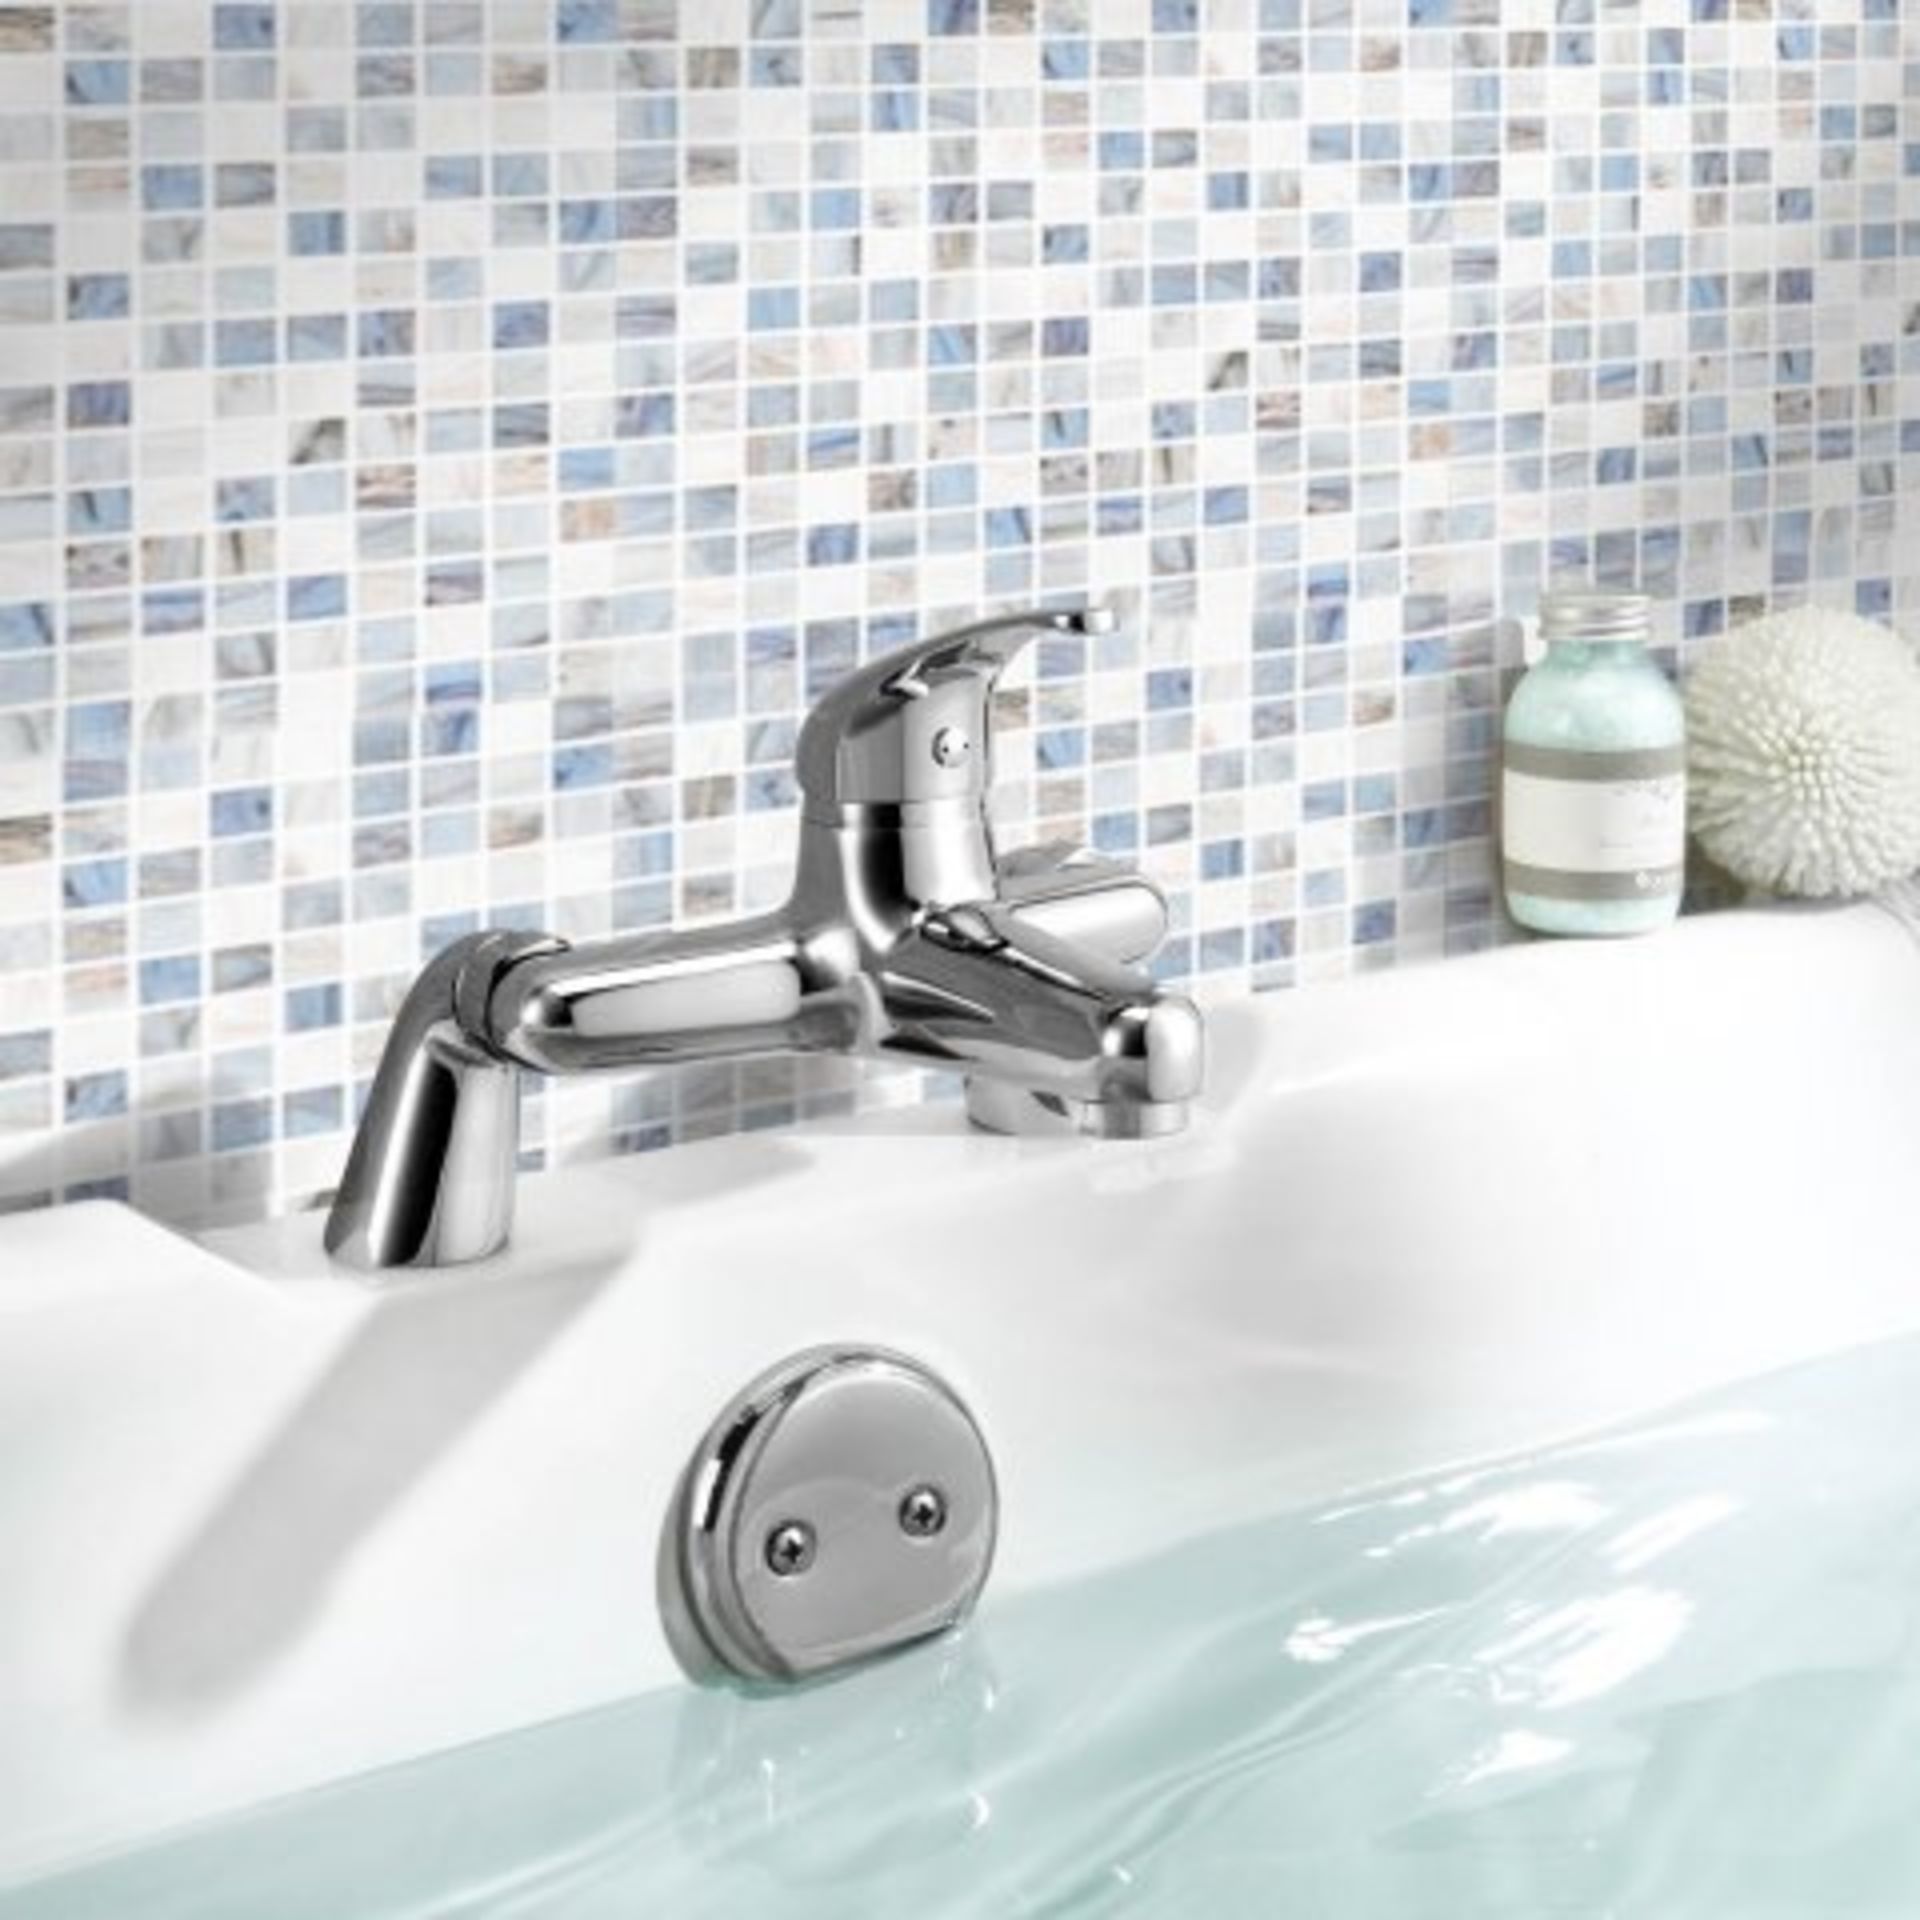 (I62) Sleek Modern Bathroom Chrome Bath Filler Lever Mixer Tap Presenting a contemporary design, - Image 2 of 4